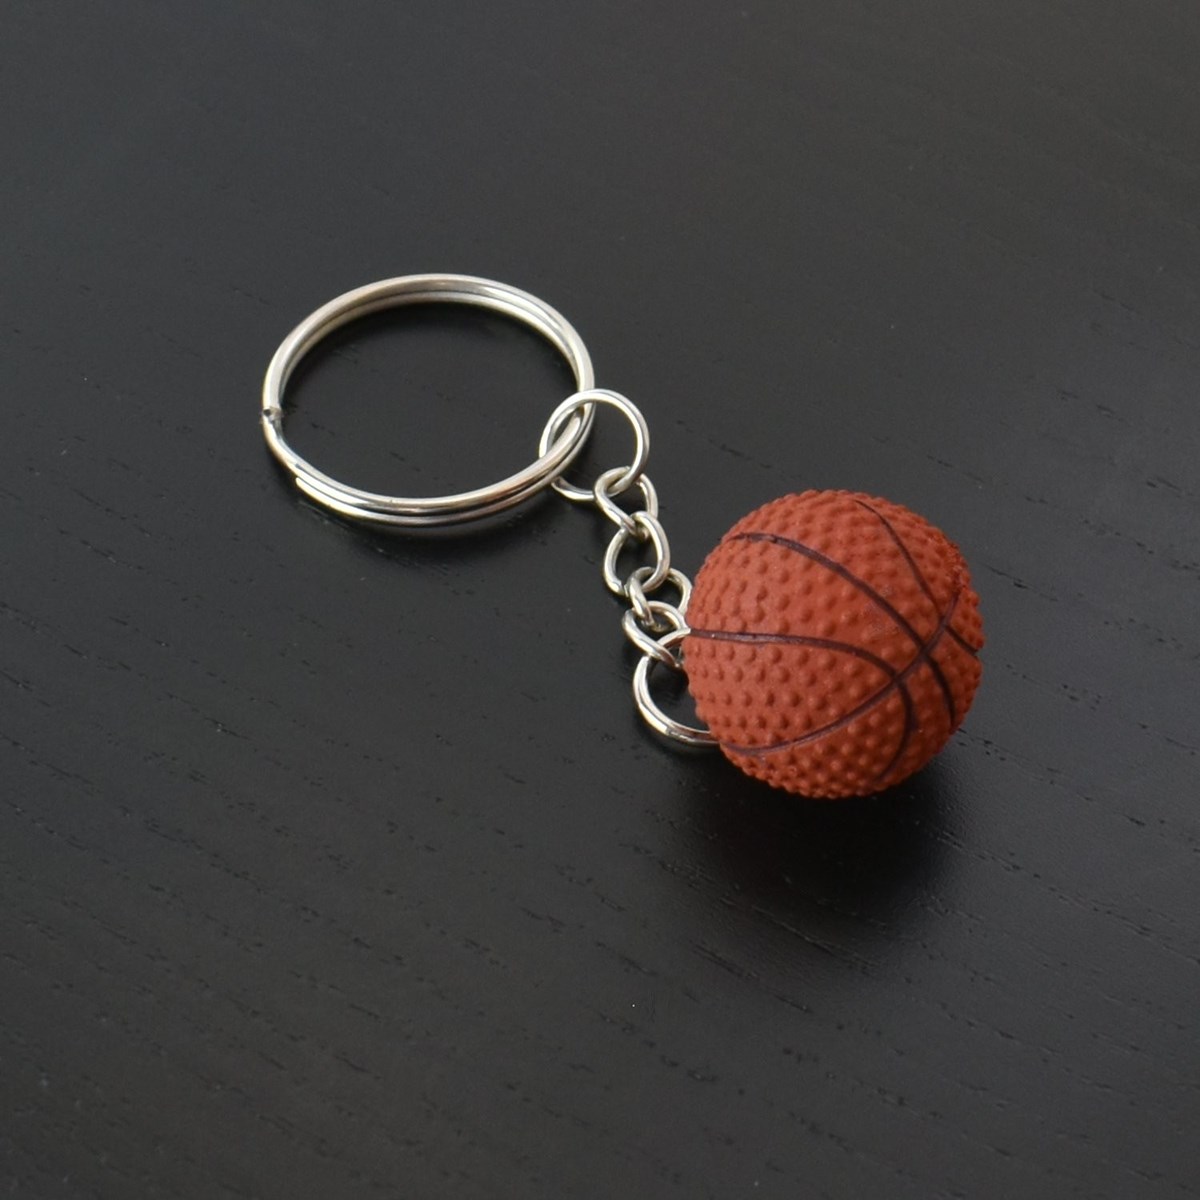 Porte-clés ballon de basket - vue 4